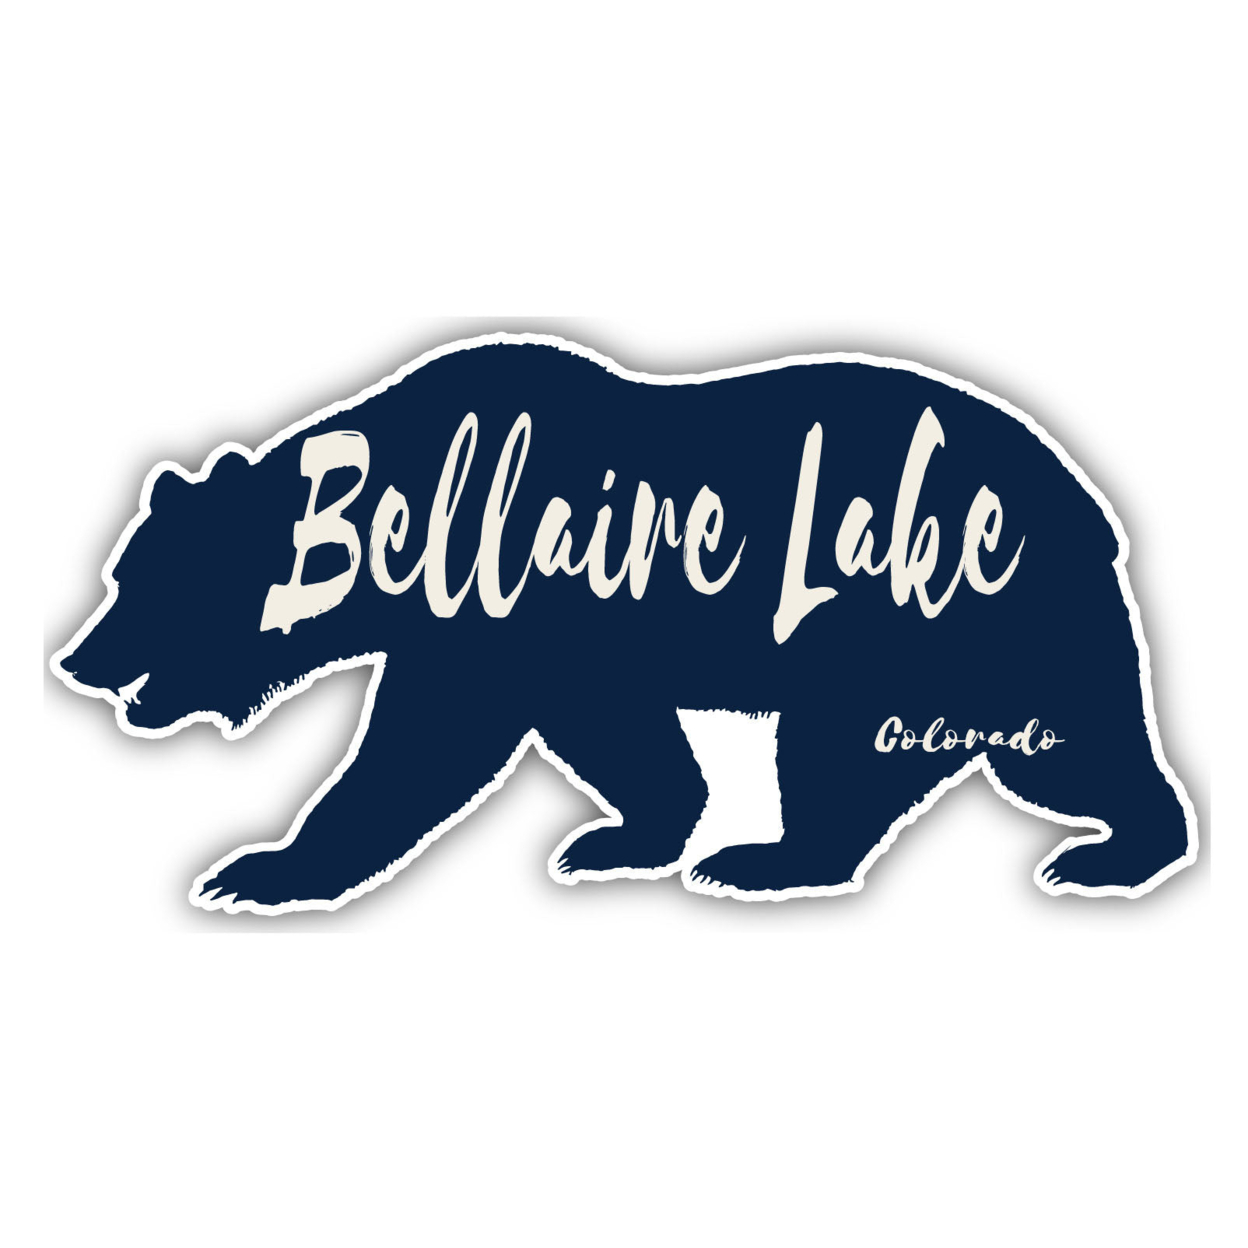 Bellaire Lake Colorado Souvenir Decorative Stickers (Choose Theme And Size) - Single Unit, 12-Inch, Bear